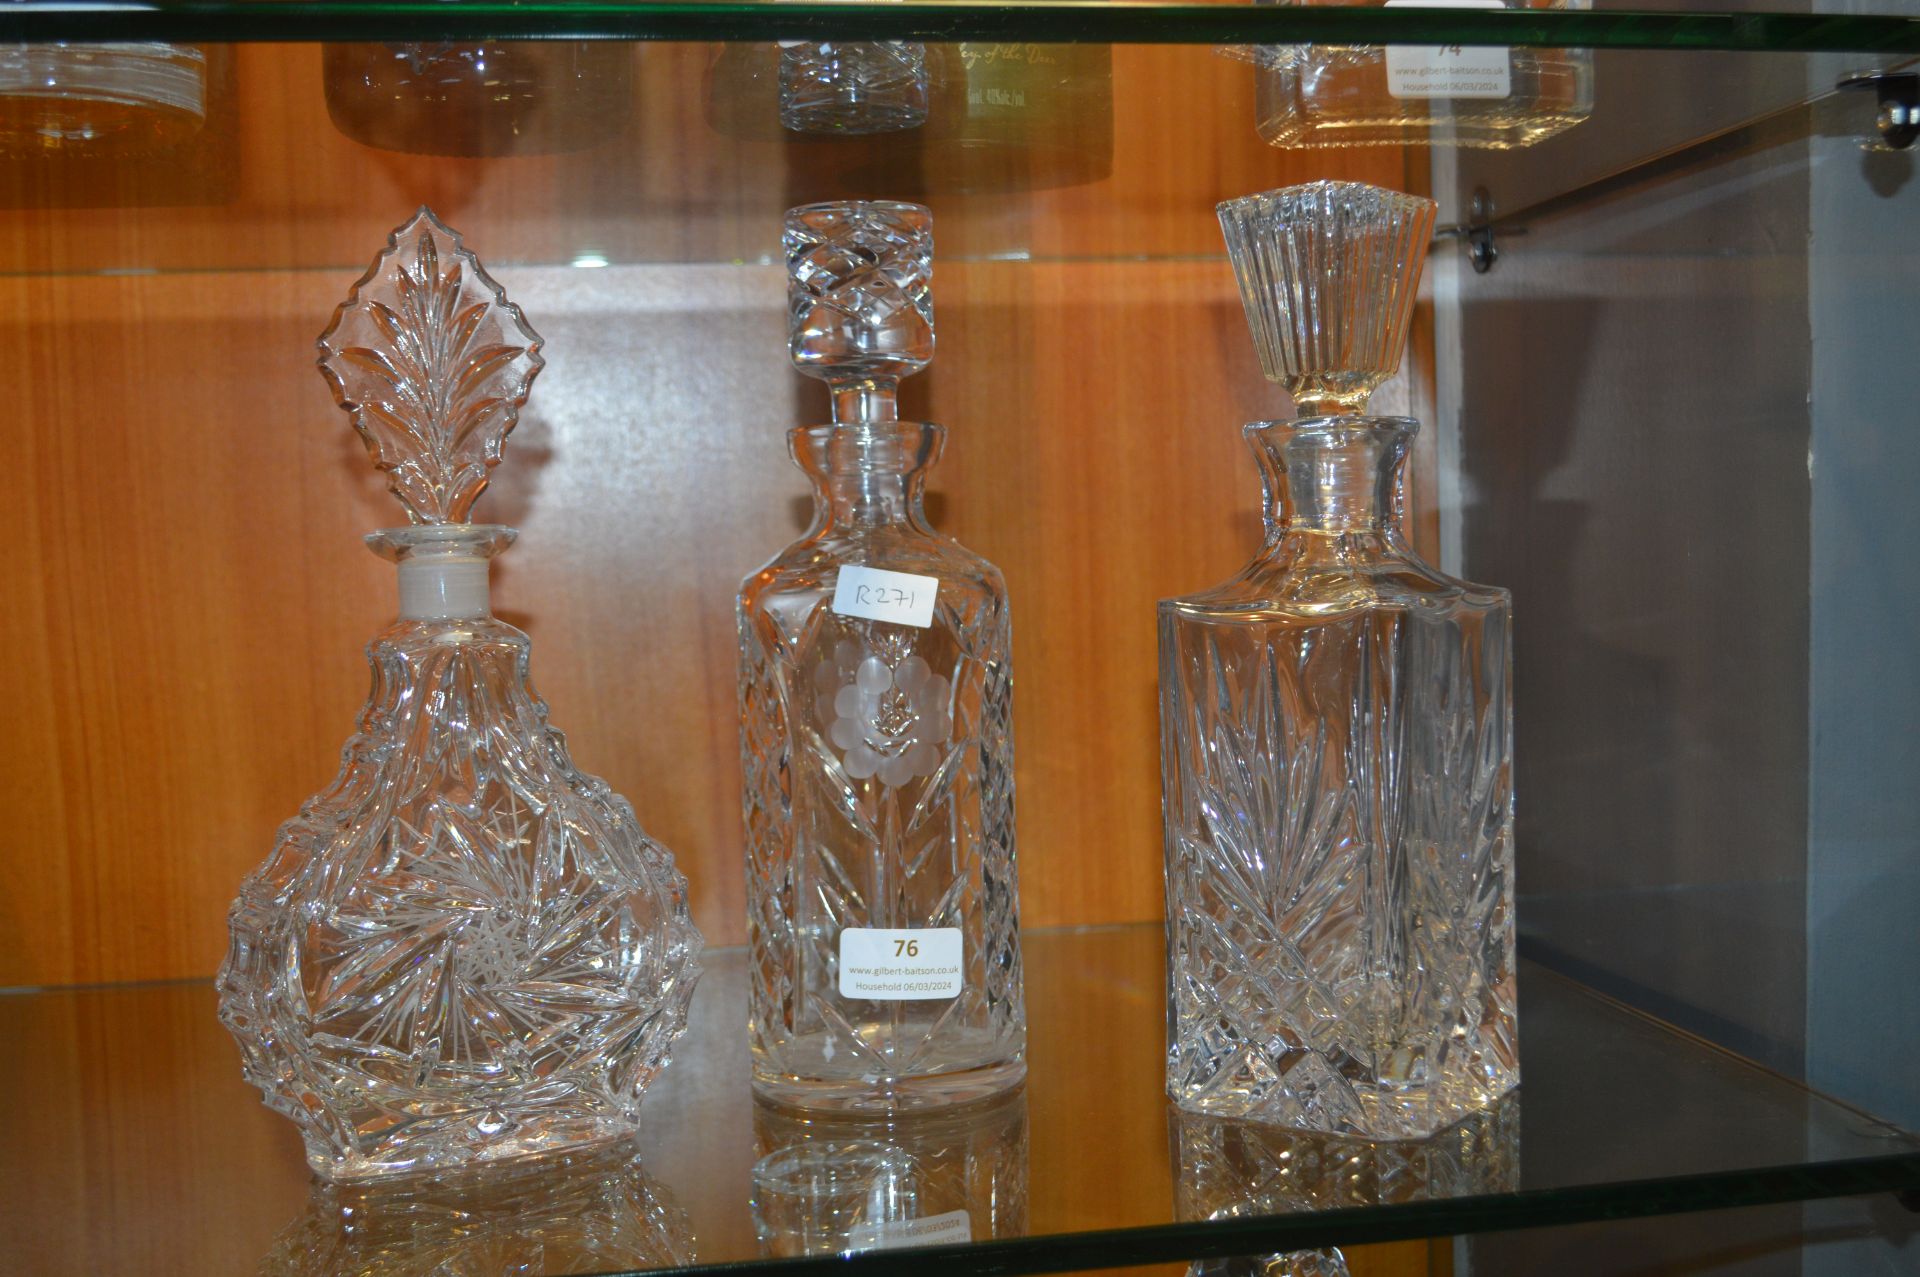 Three Glass Decanters